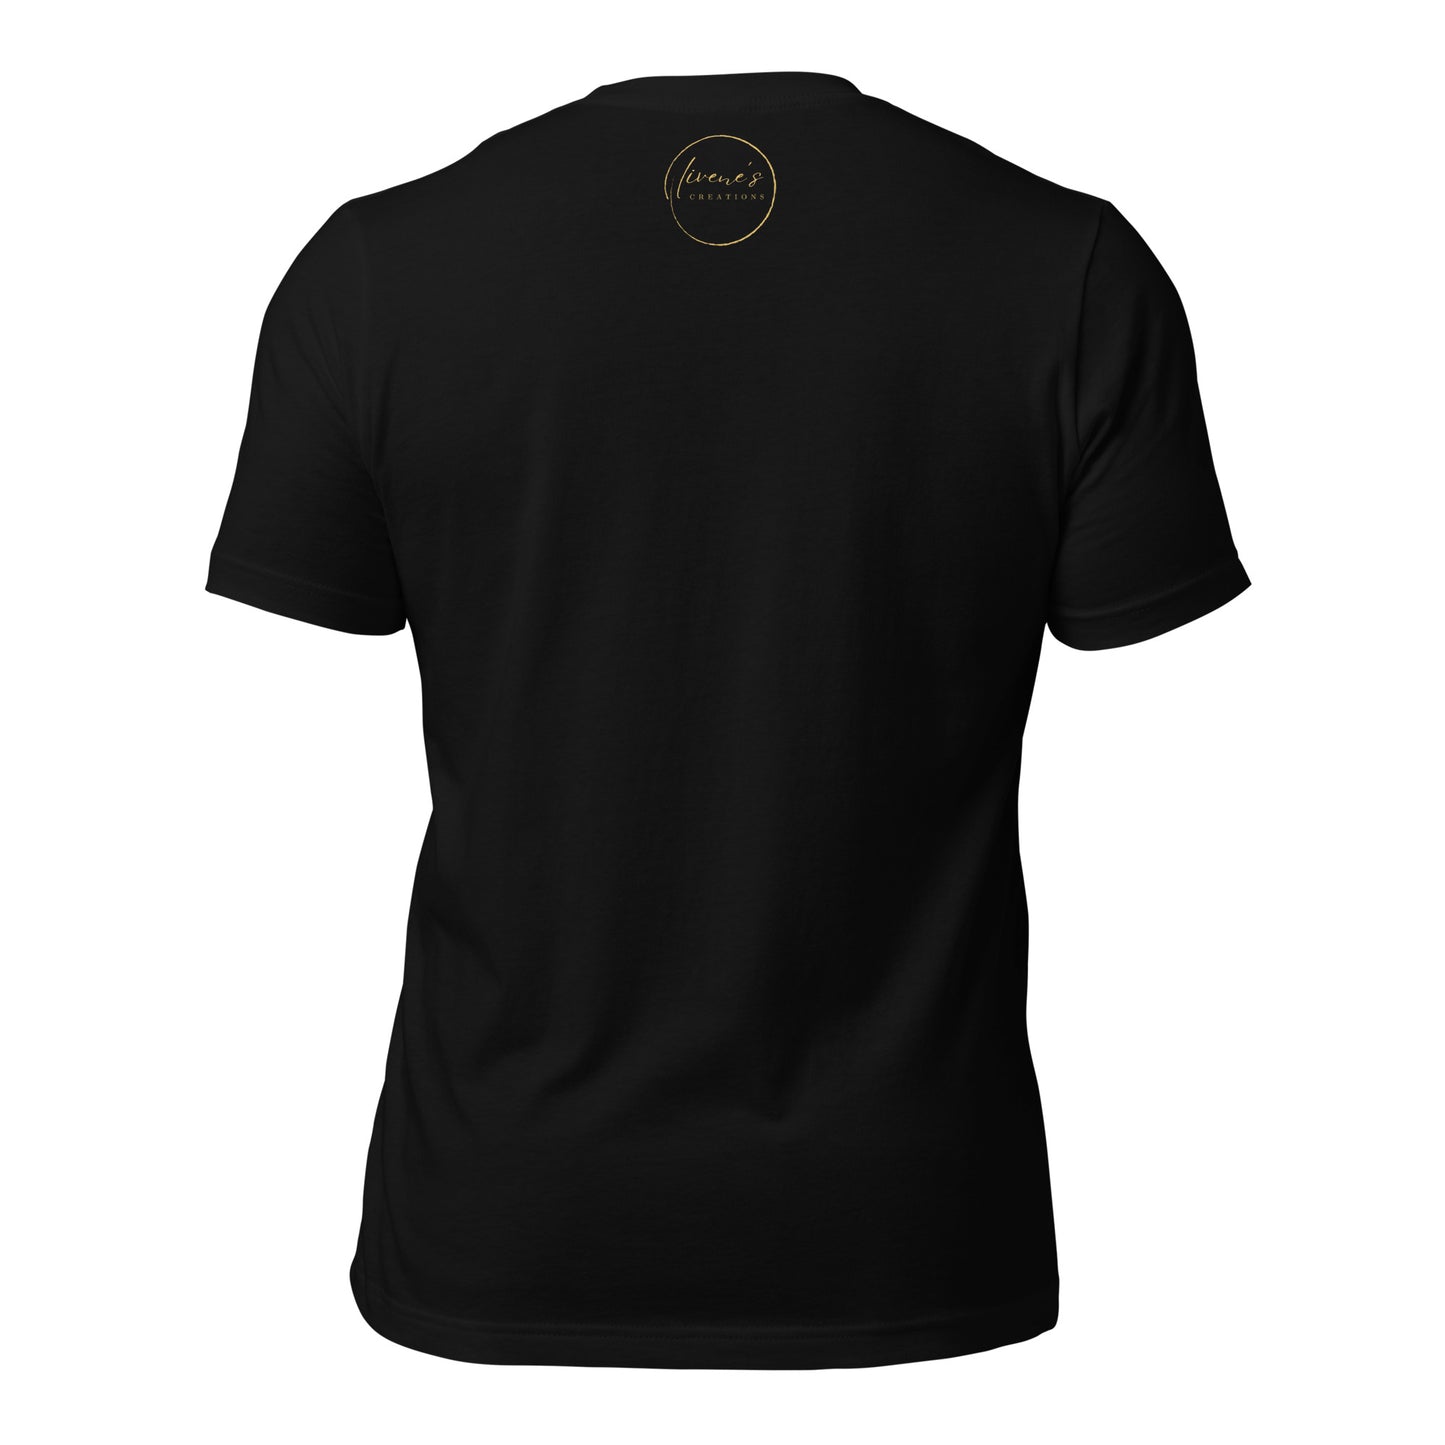 Australian South Sea Islander (ASSI) Unisex t-shirt